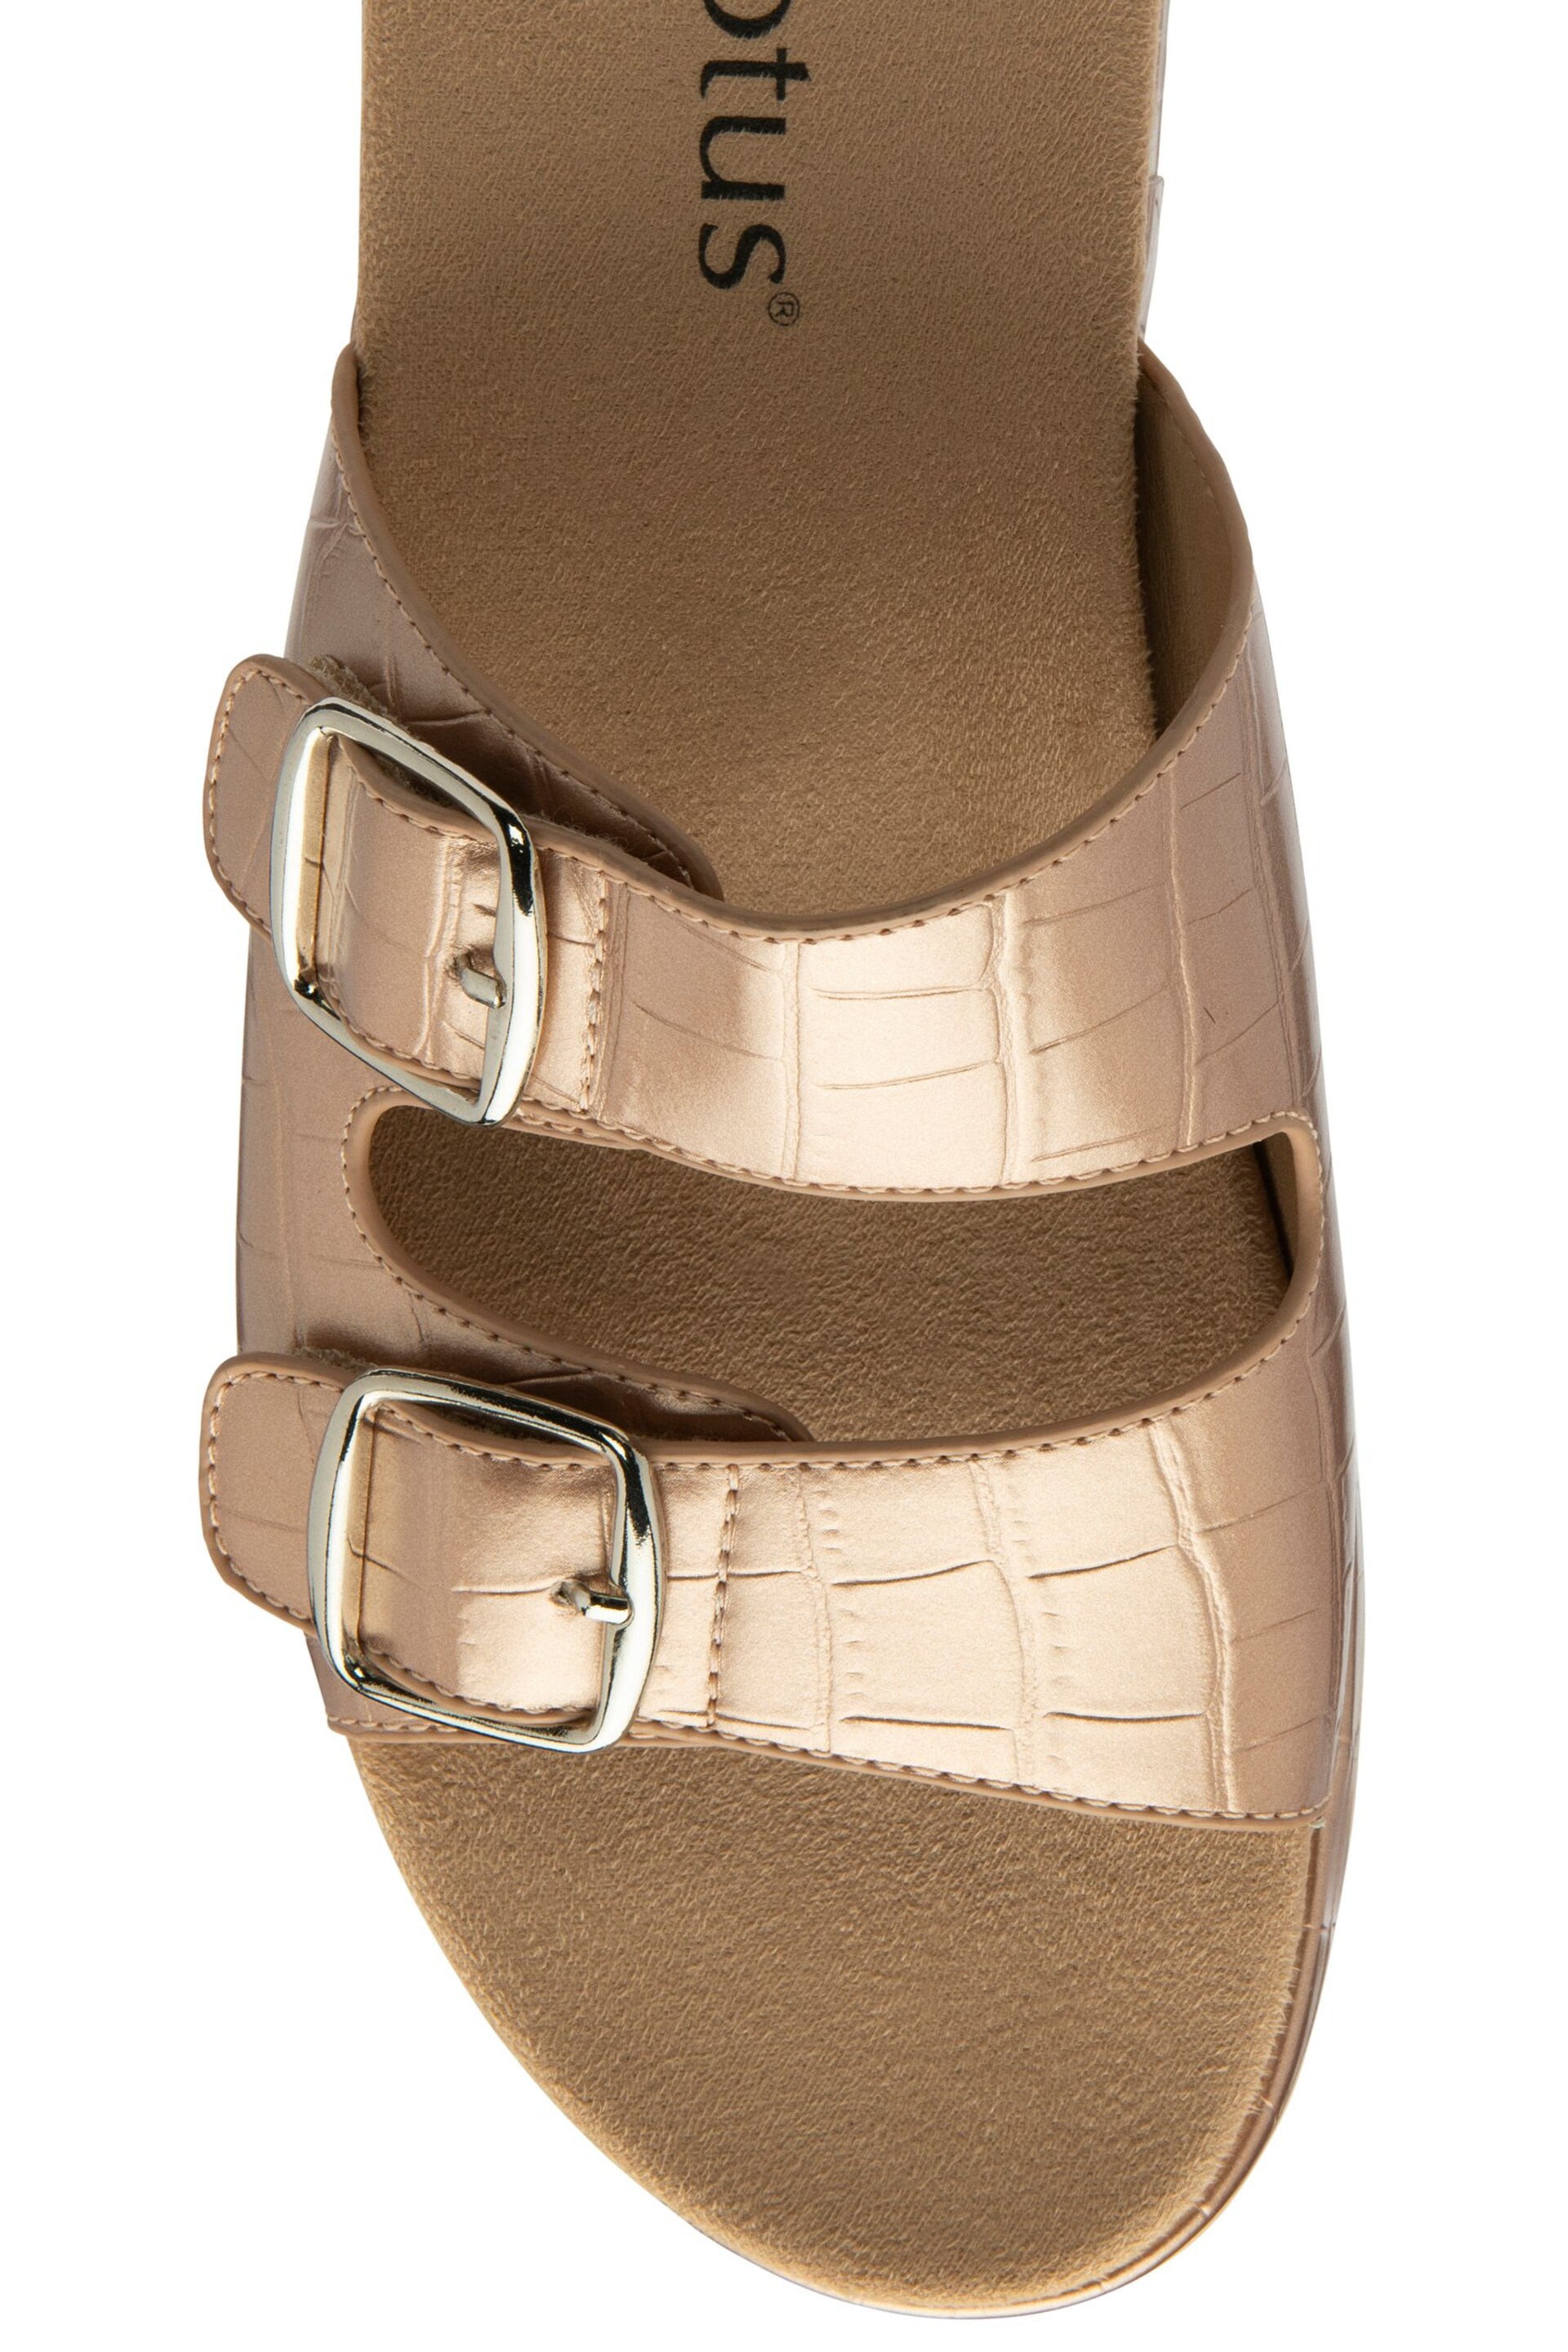 Lotus Pink Flatform Mule Sandals - Image 4 of 4